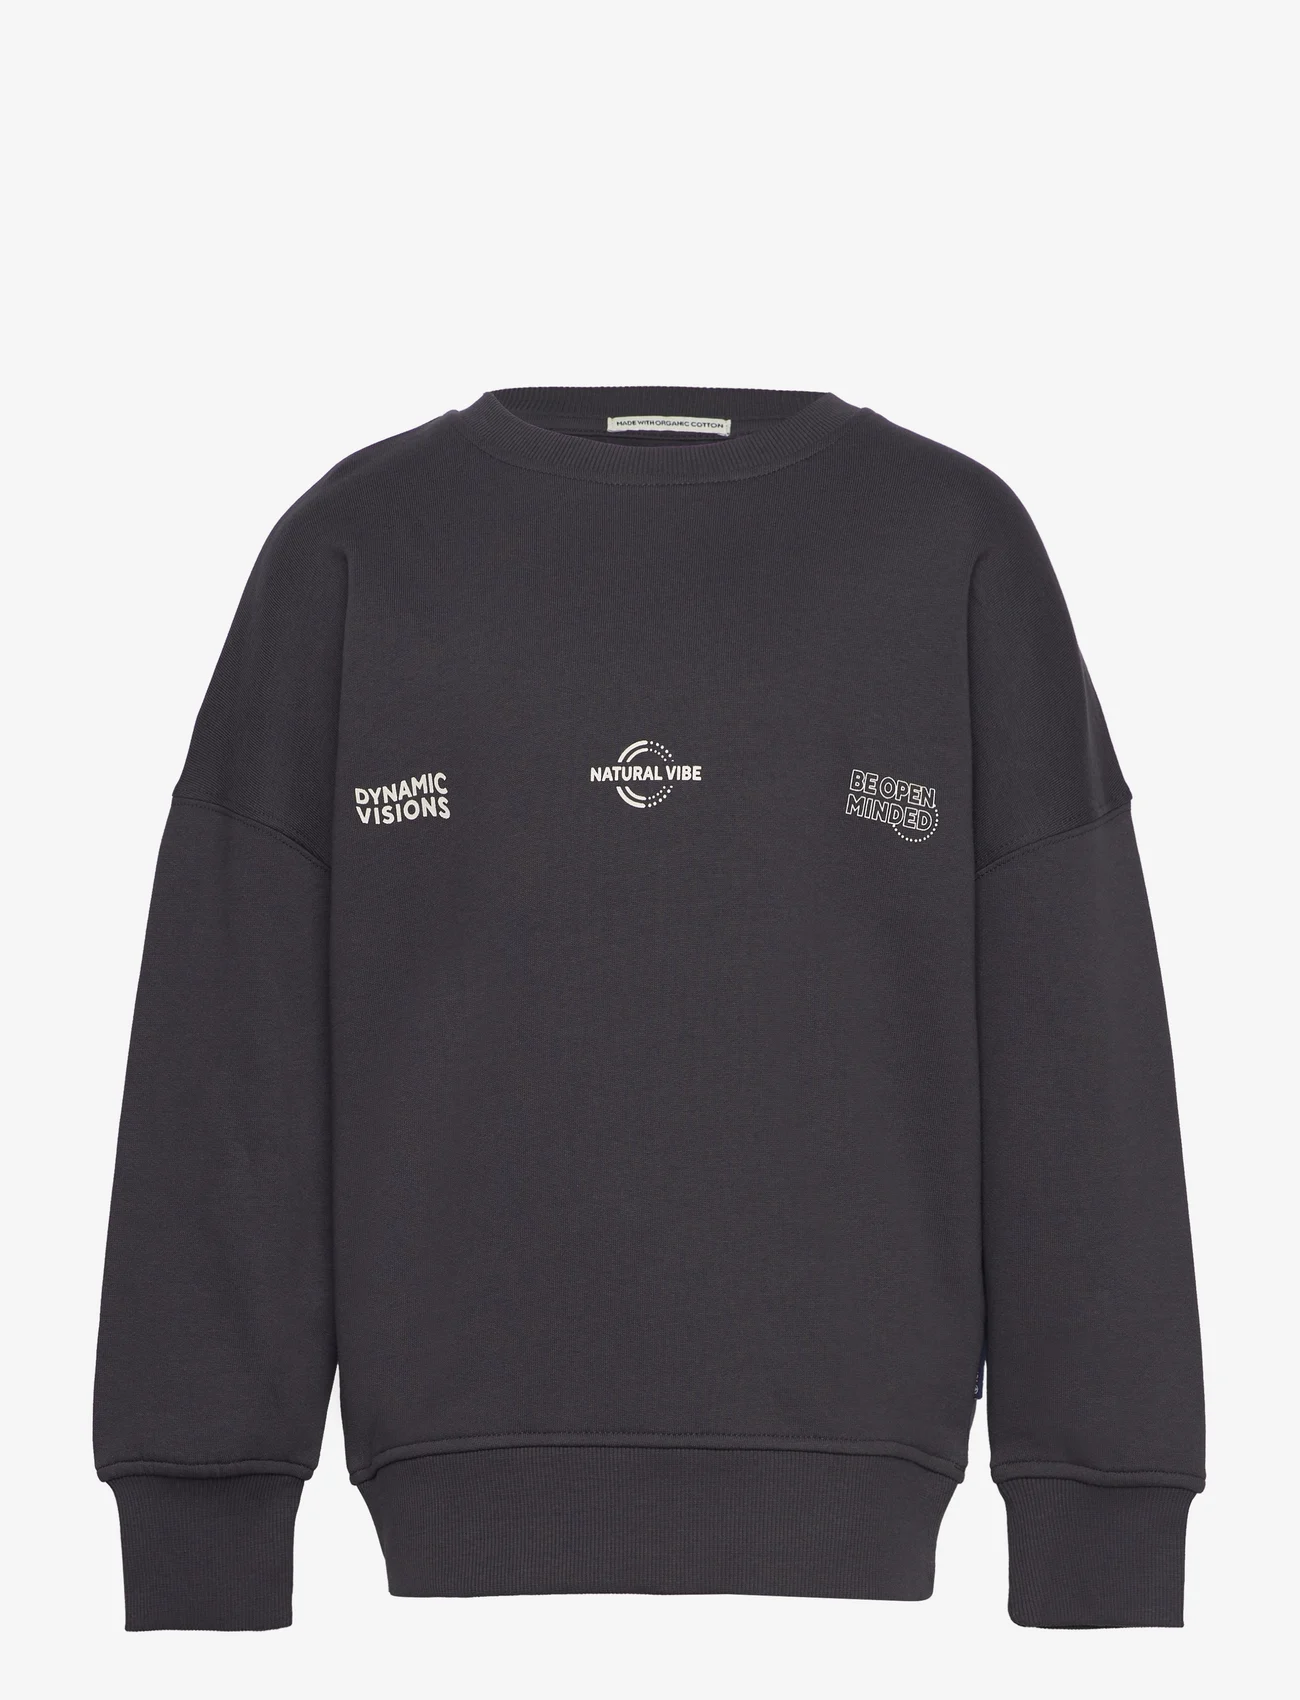 Tom Tailor - printed sweatshirt - bluzy - coal grey - 0